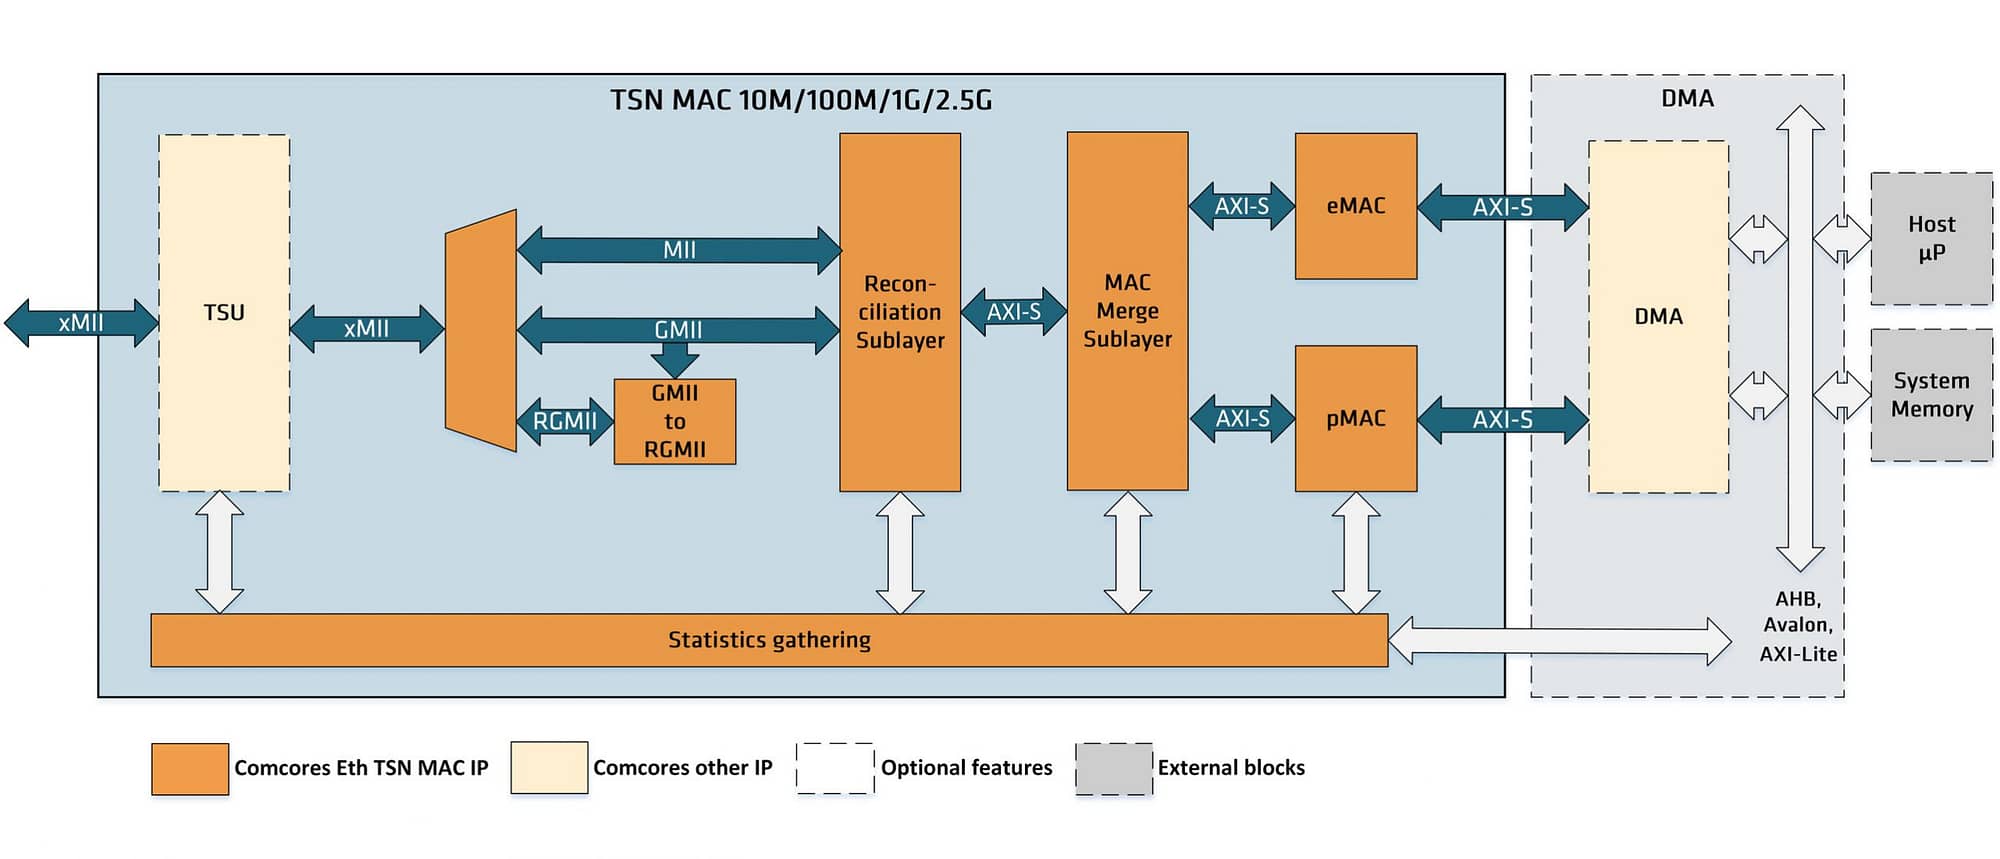 Comcores Ethernet TSN MAC 10M 100M 1G 2.5G diagram